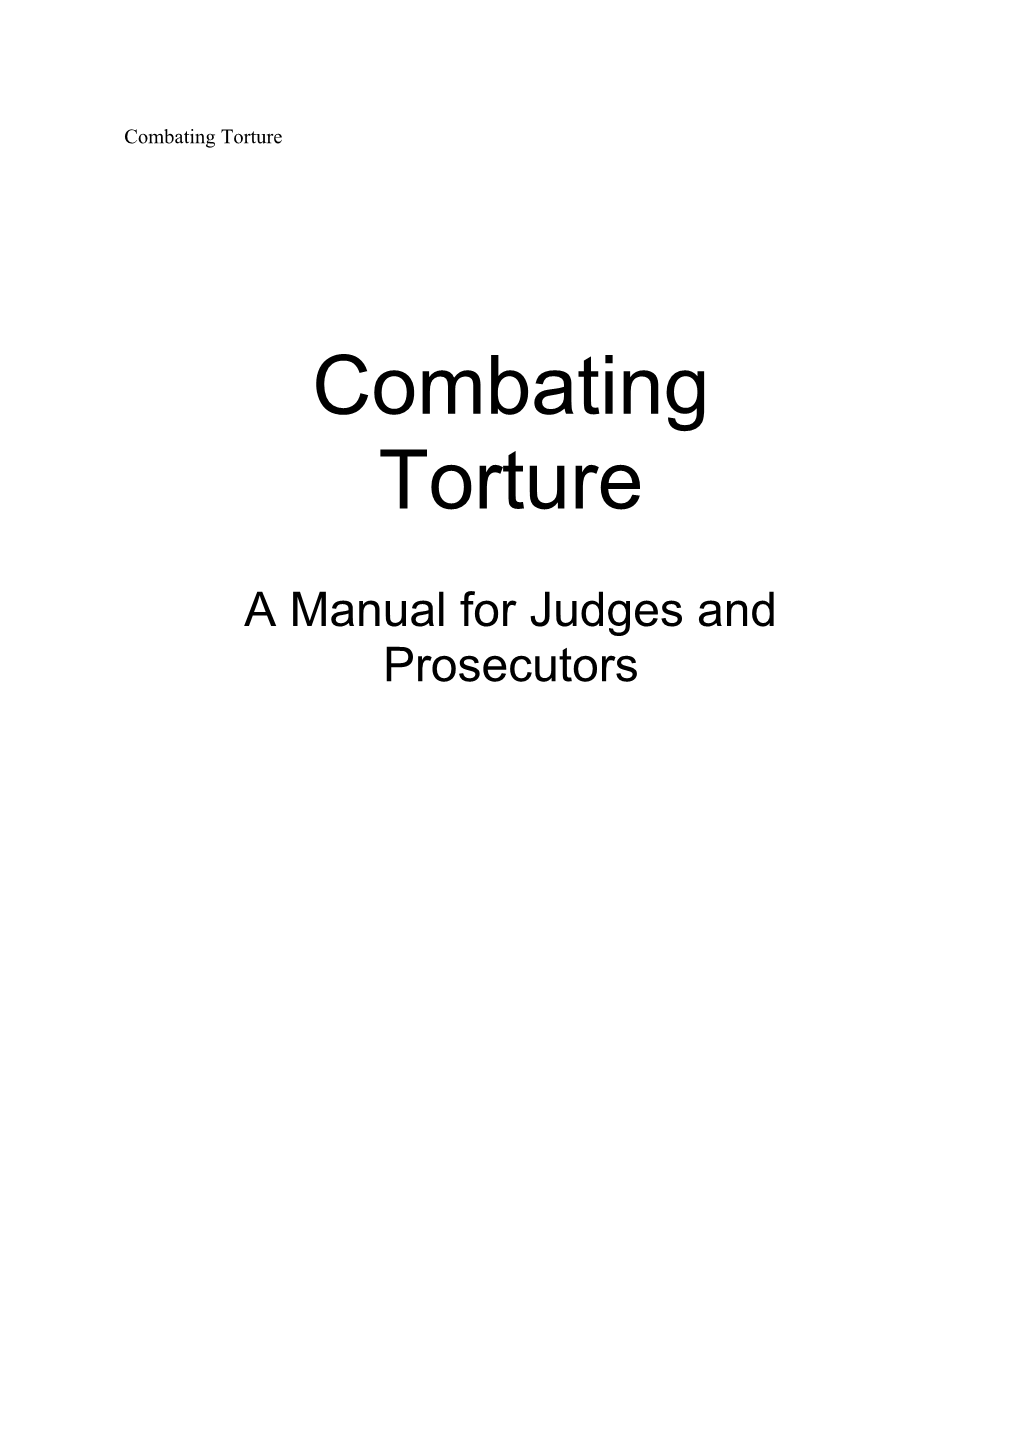 A Manual for Judges and Prosecutors